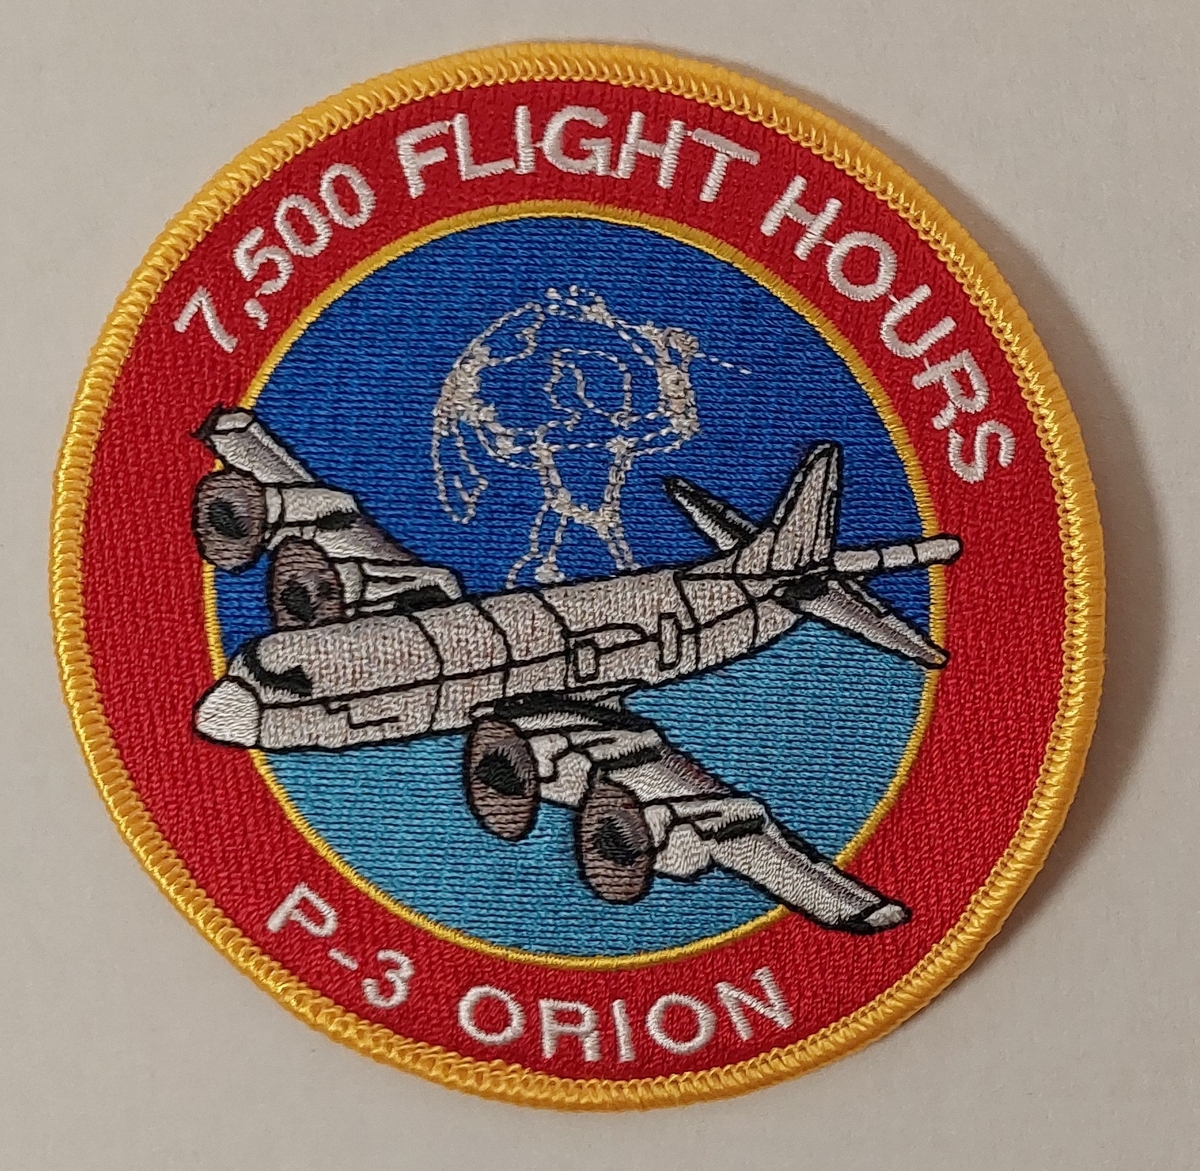 P-3 Orion fly i sentrum